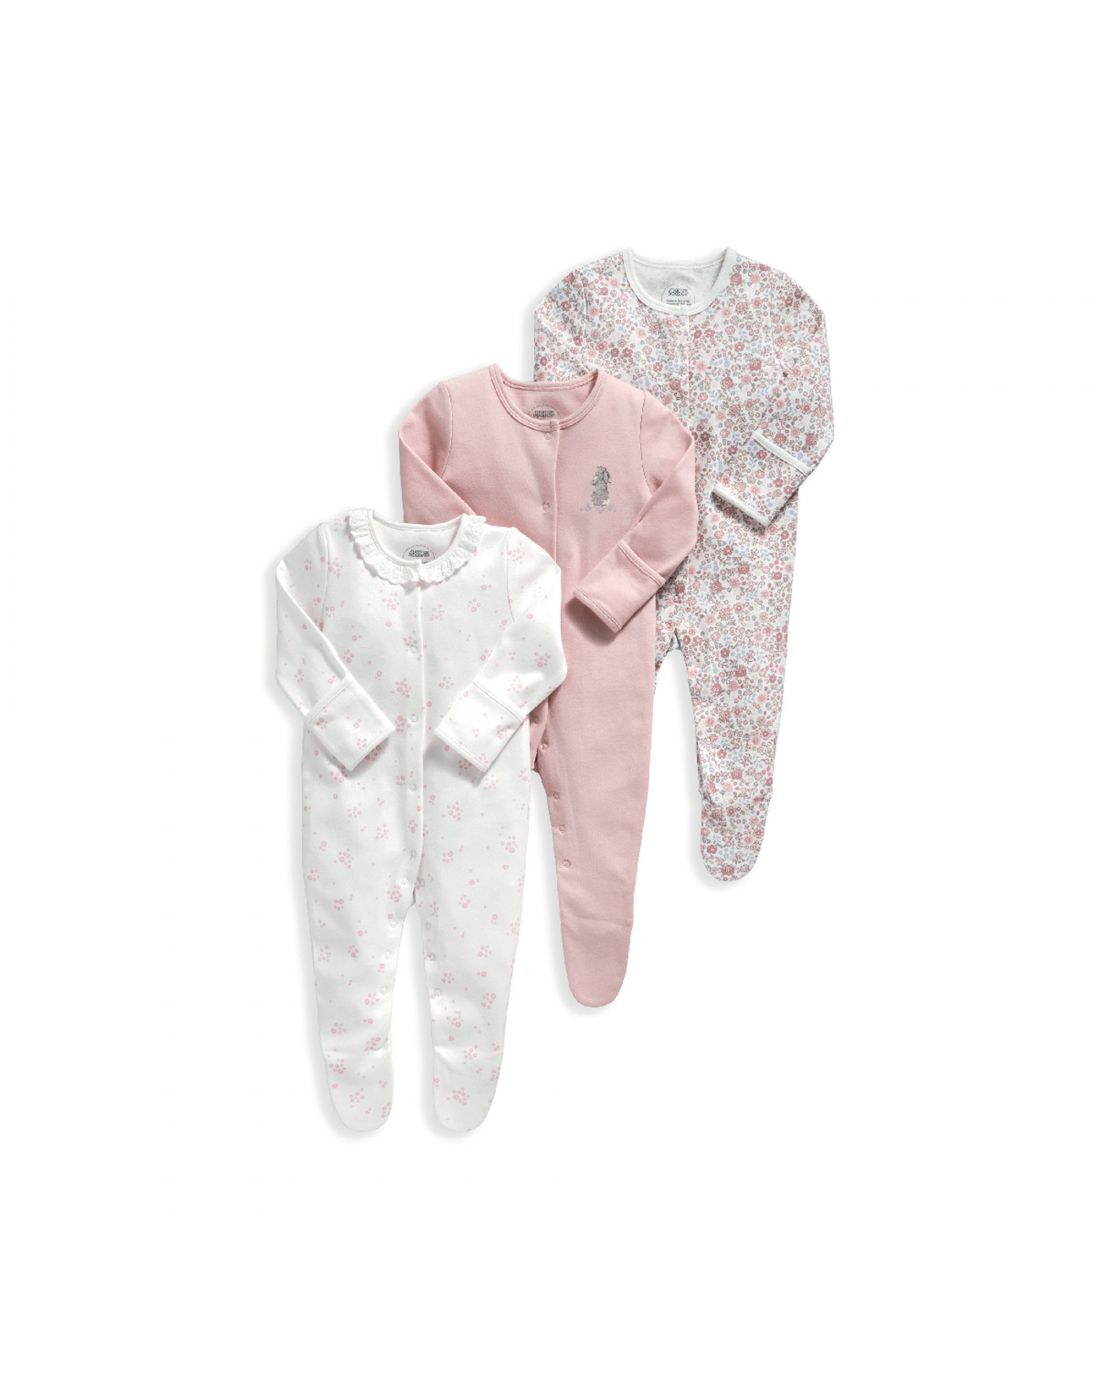 Mamas & Papas Safari  Cotton Sleepsuits 3 Pack